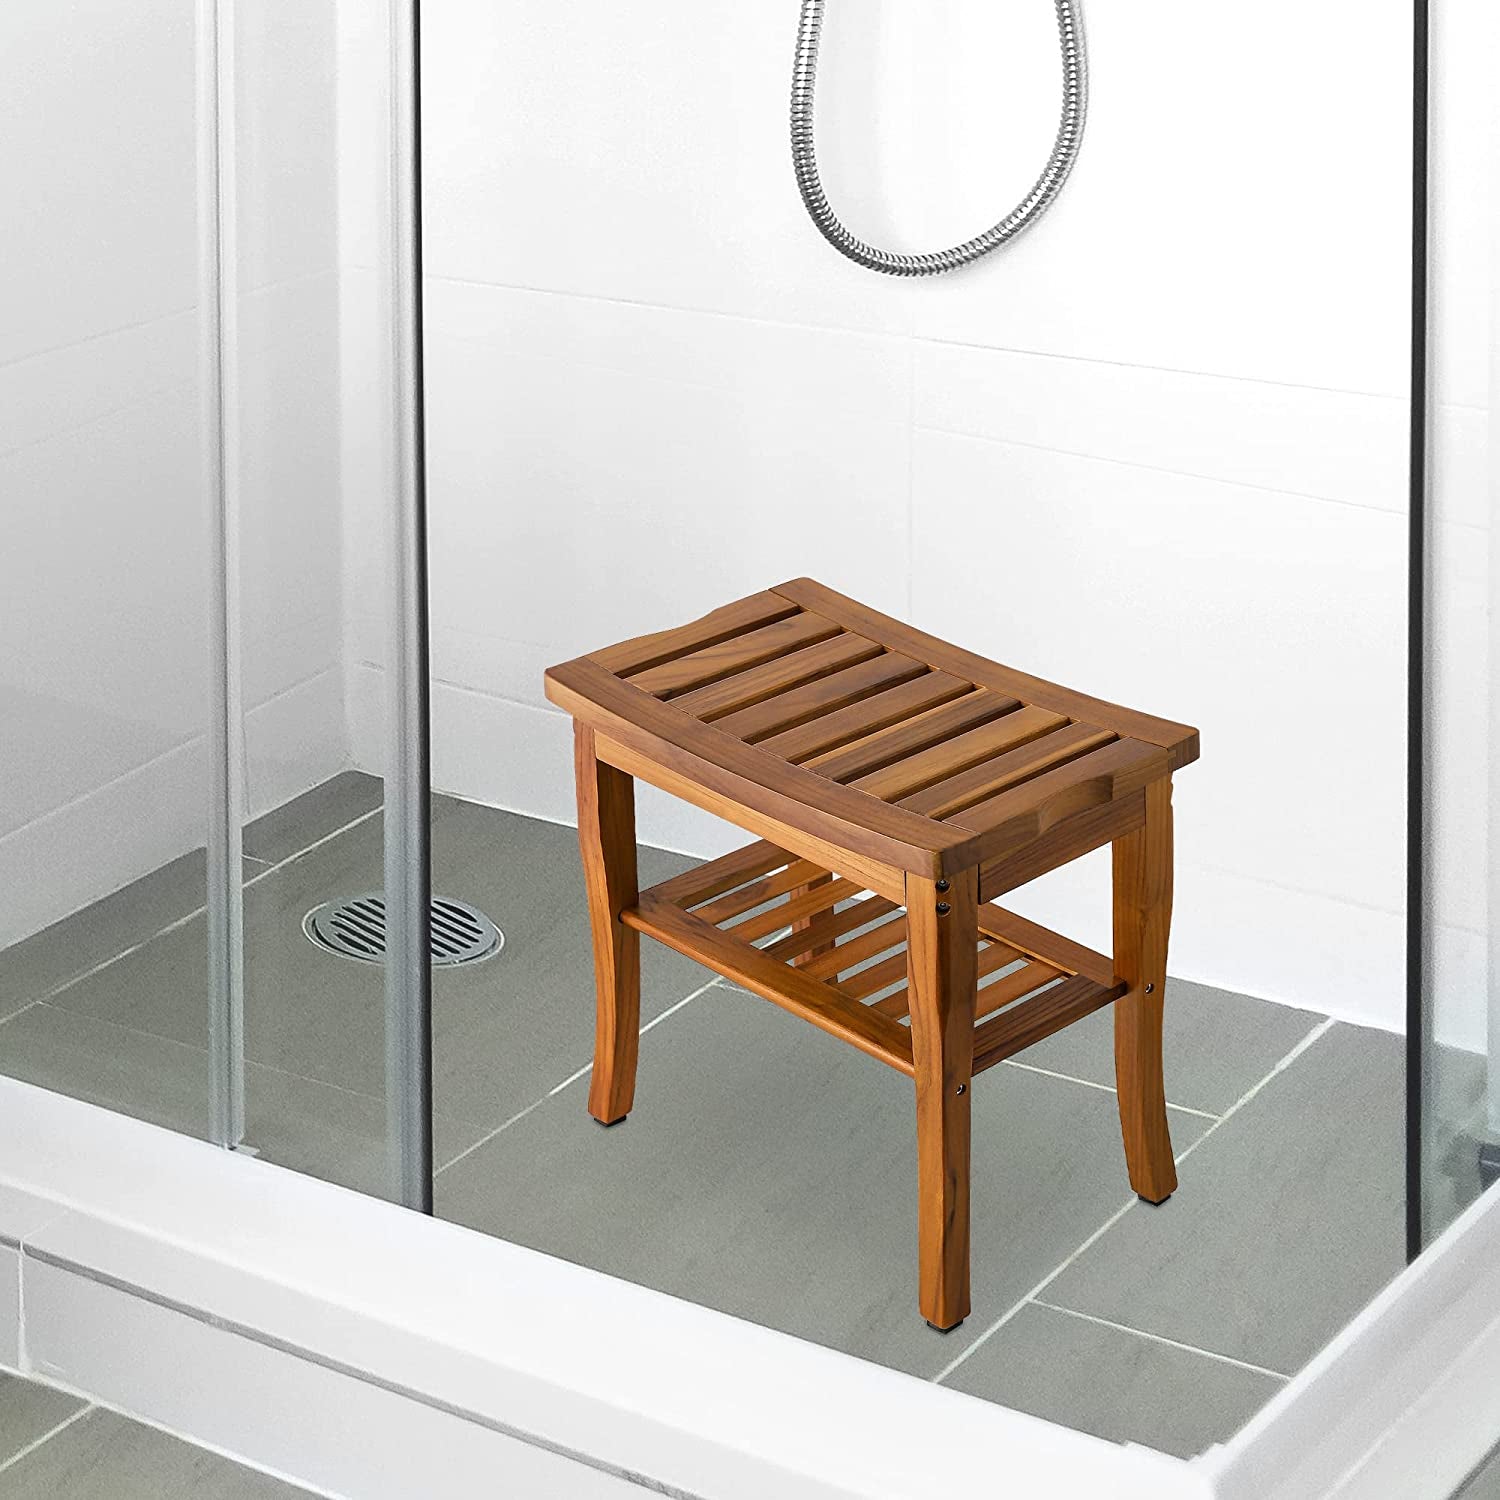 Teak Shower Bench, Spa Bath Shower Stool with Storage Shelf, Wooden Seat Stool for Bathroom